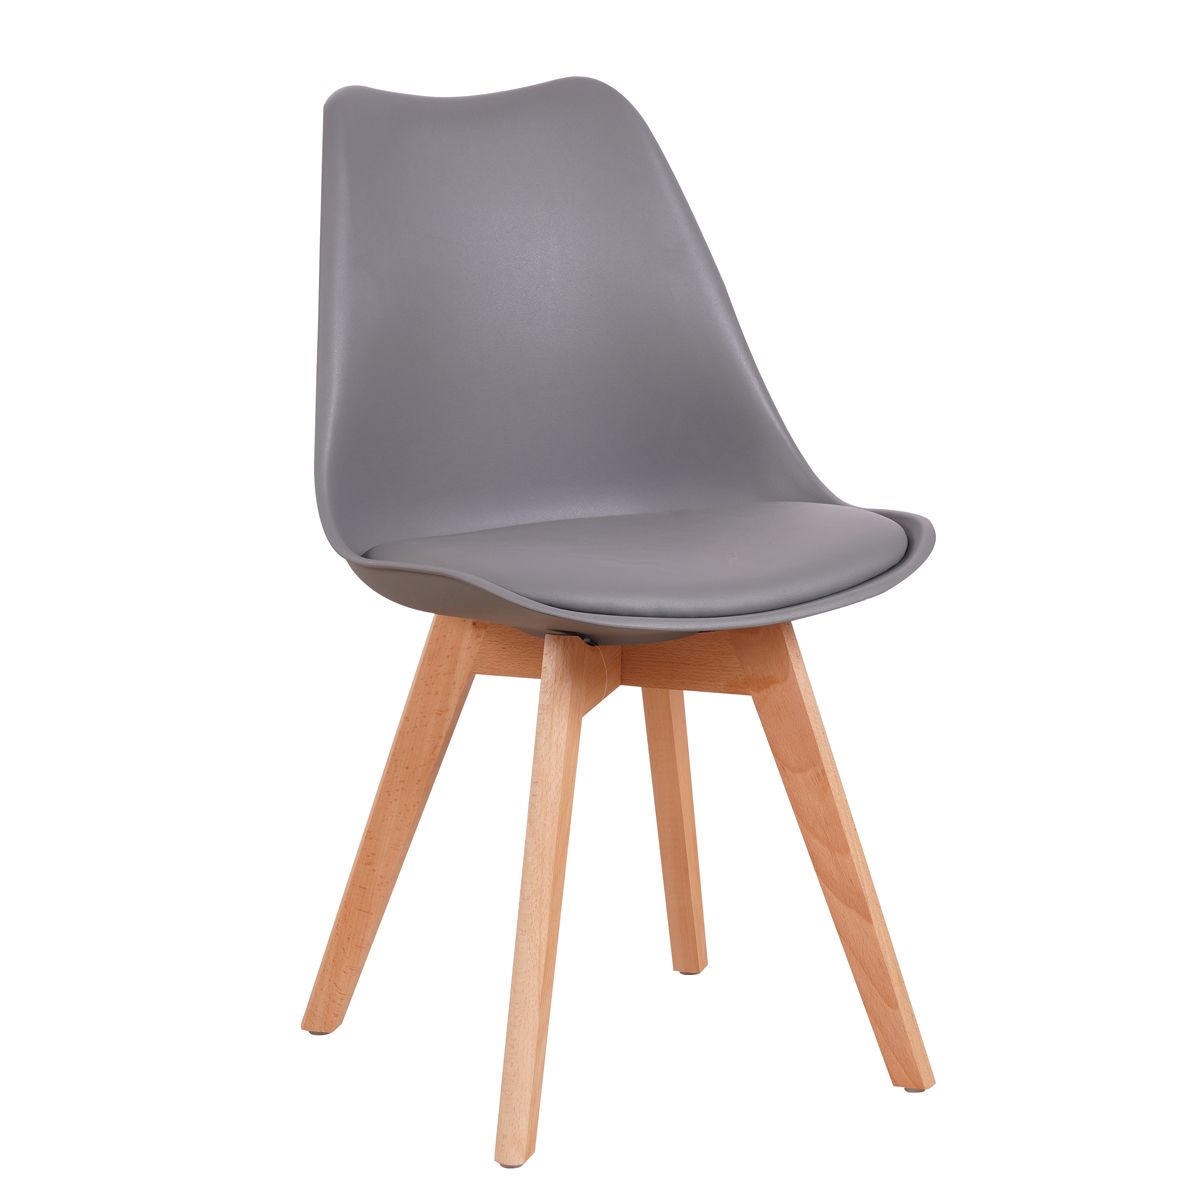 Chair GROUGH Gray PP / PU / Wood 49x56x83cm